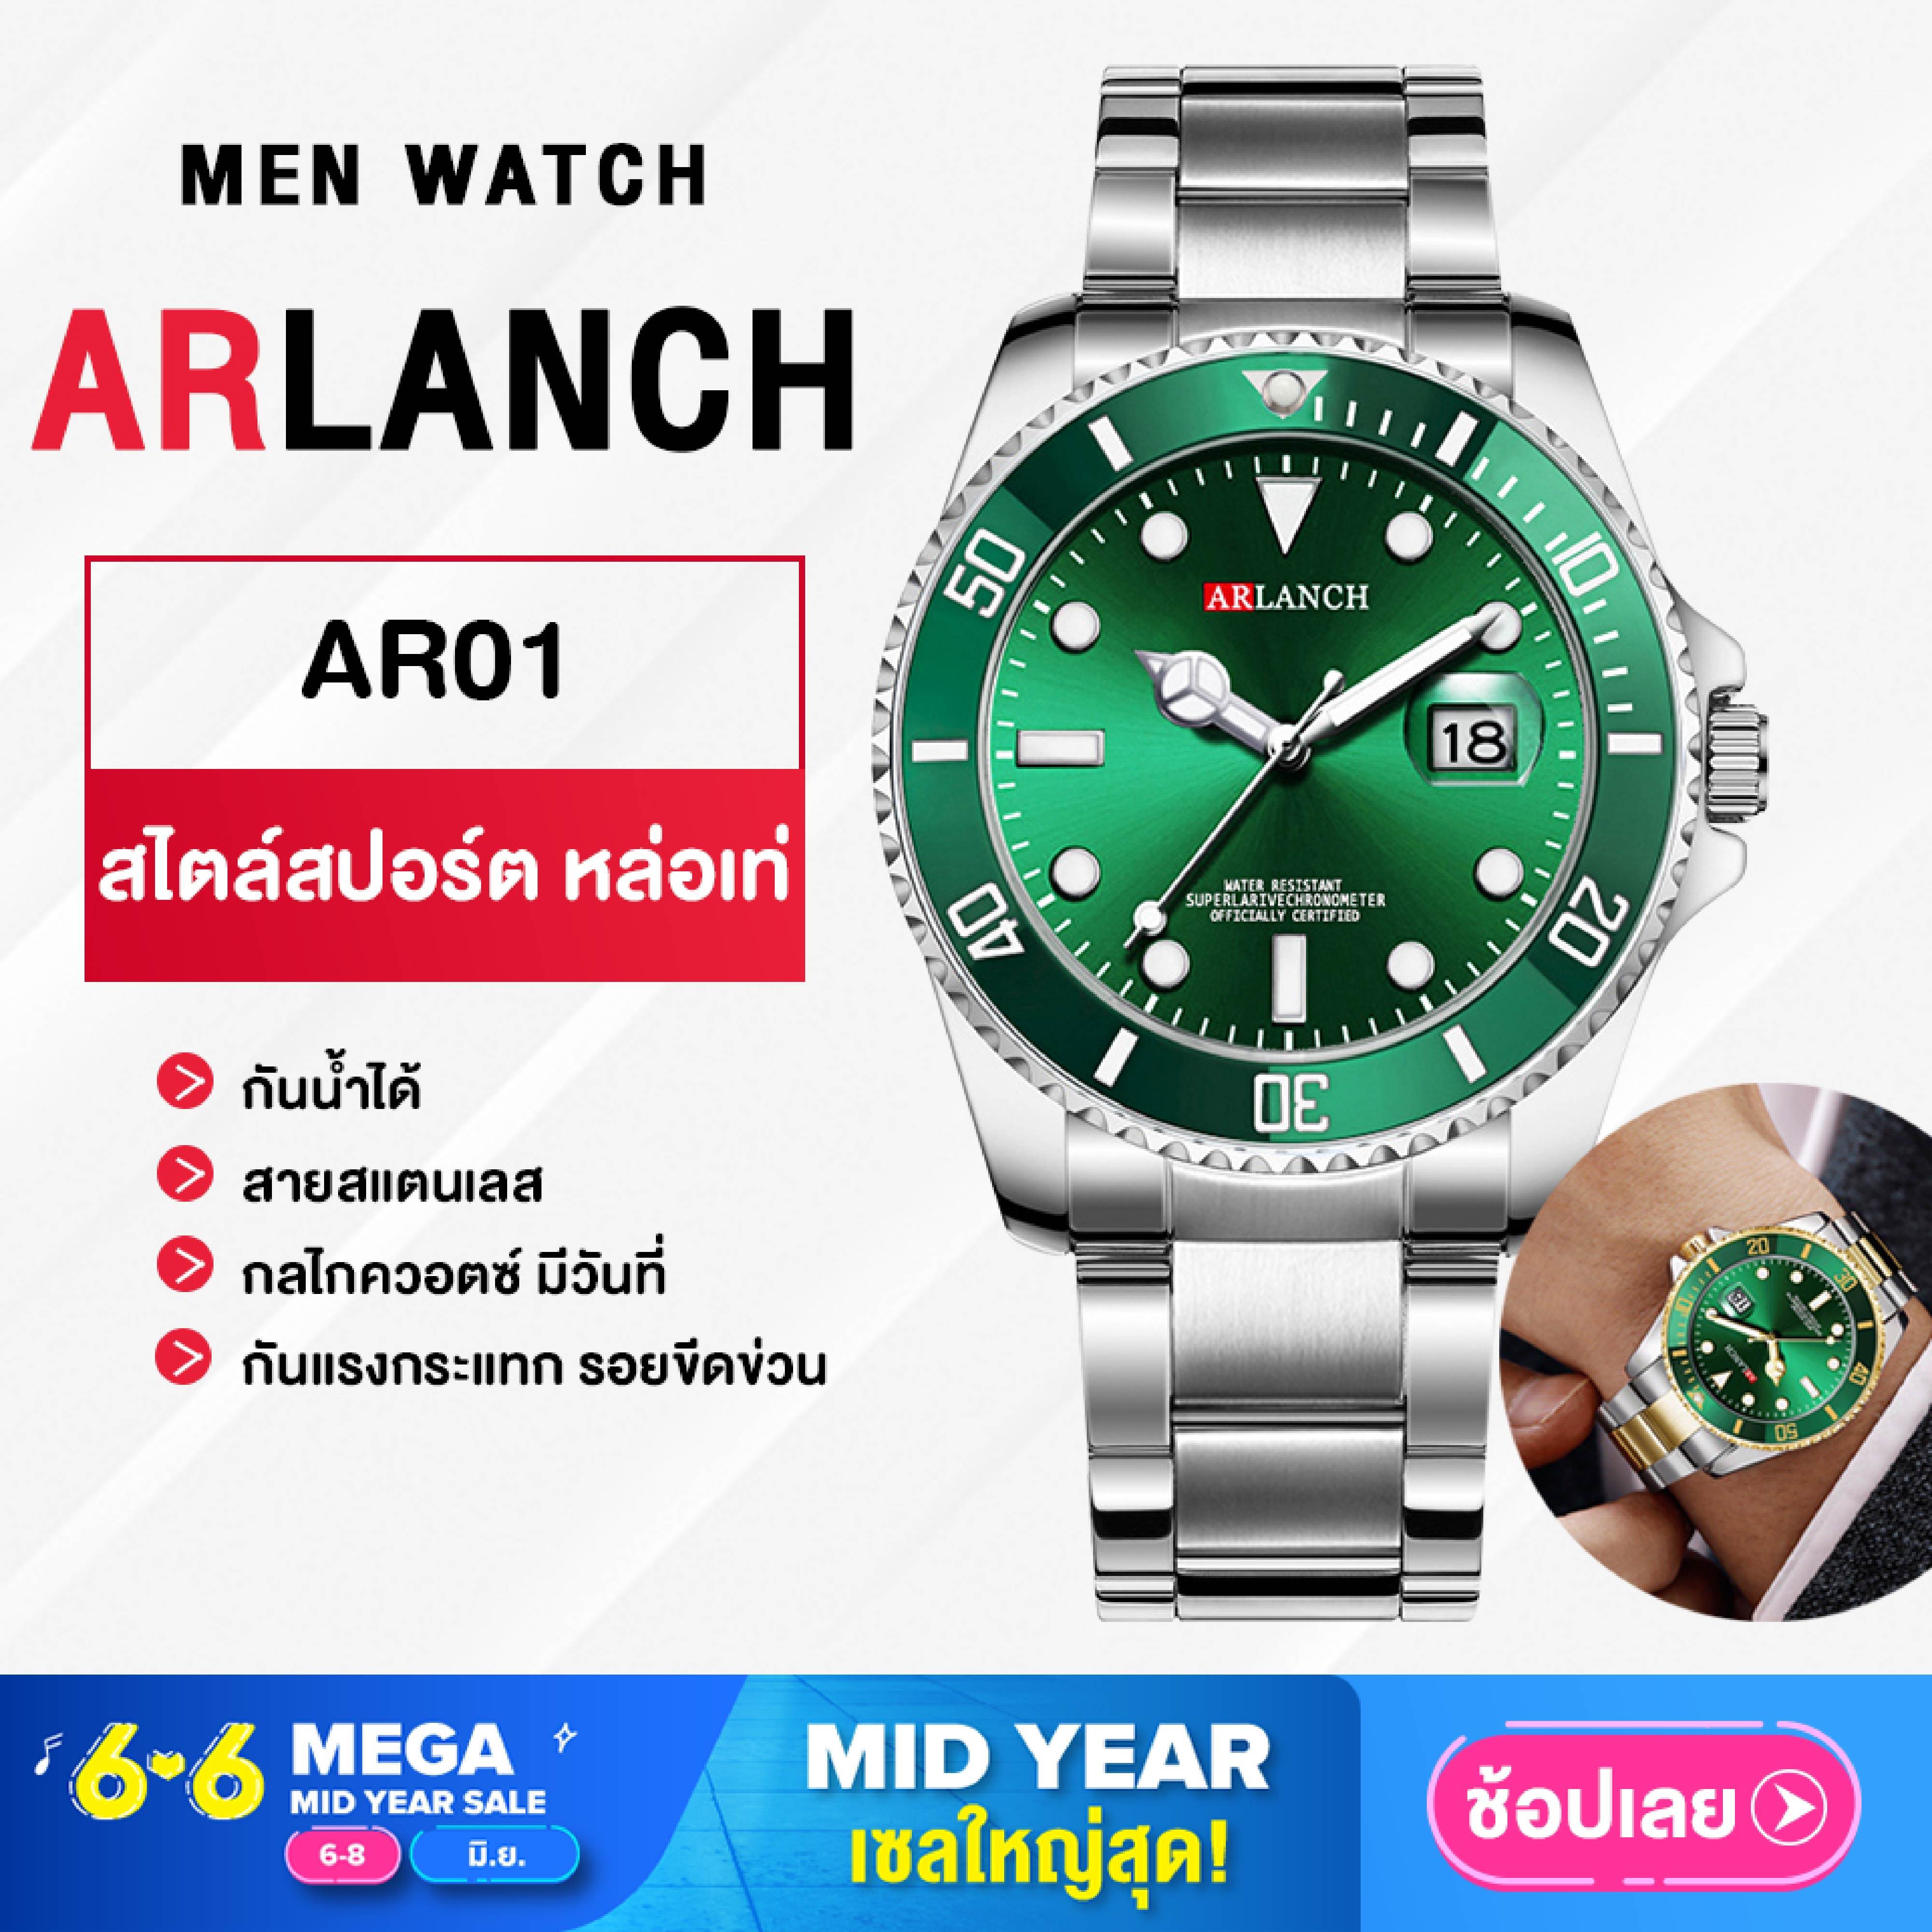 ARLANCH นาฬิกาผู้ชาย นาฬิกาธุรกิจ นาฬิกาข้อมือสแตนเลส กันน้ำ พร้อมปฏิทินคู่ นาฬิกาควอตซ์ ดีไซน์ทันสมัย รุ่นใหม่ ส่งไว มีบริการเก็บเงินปลายทาง